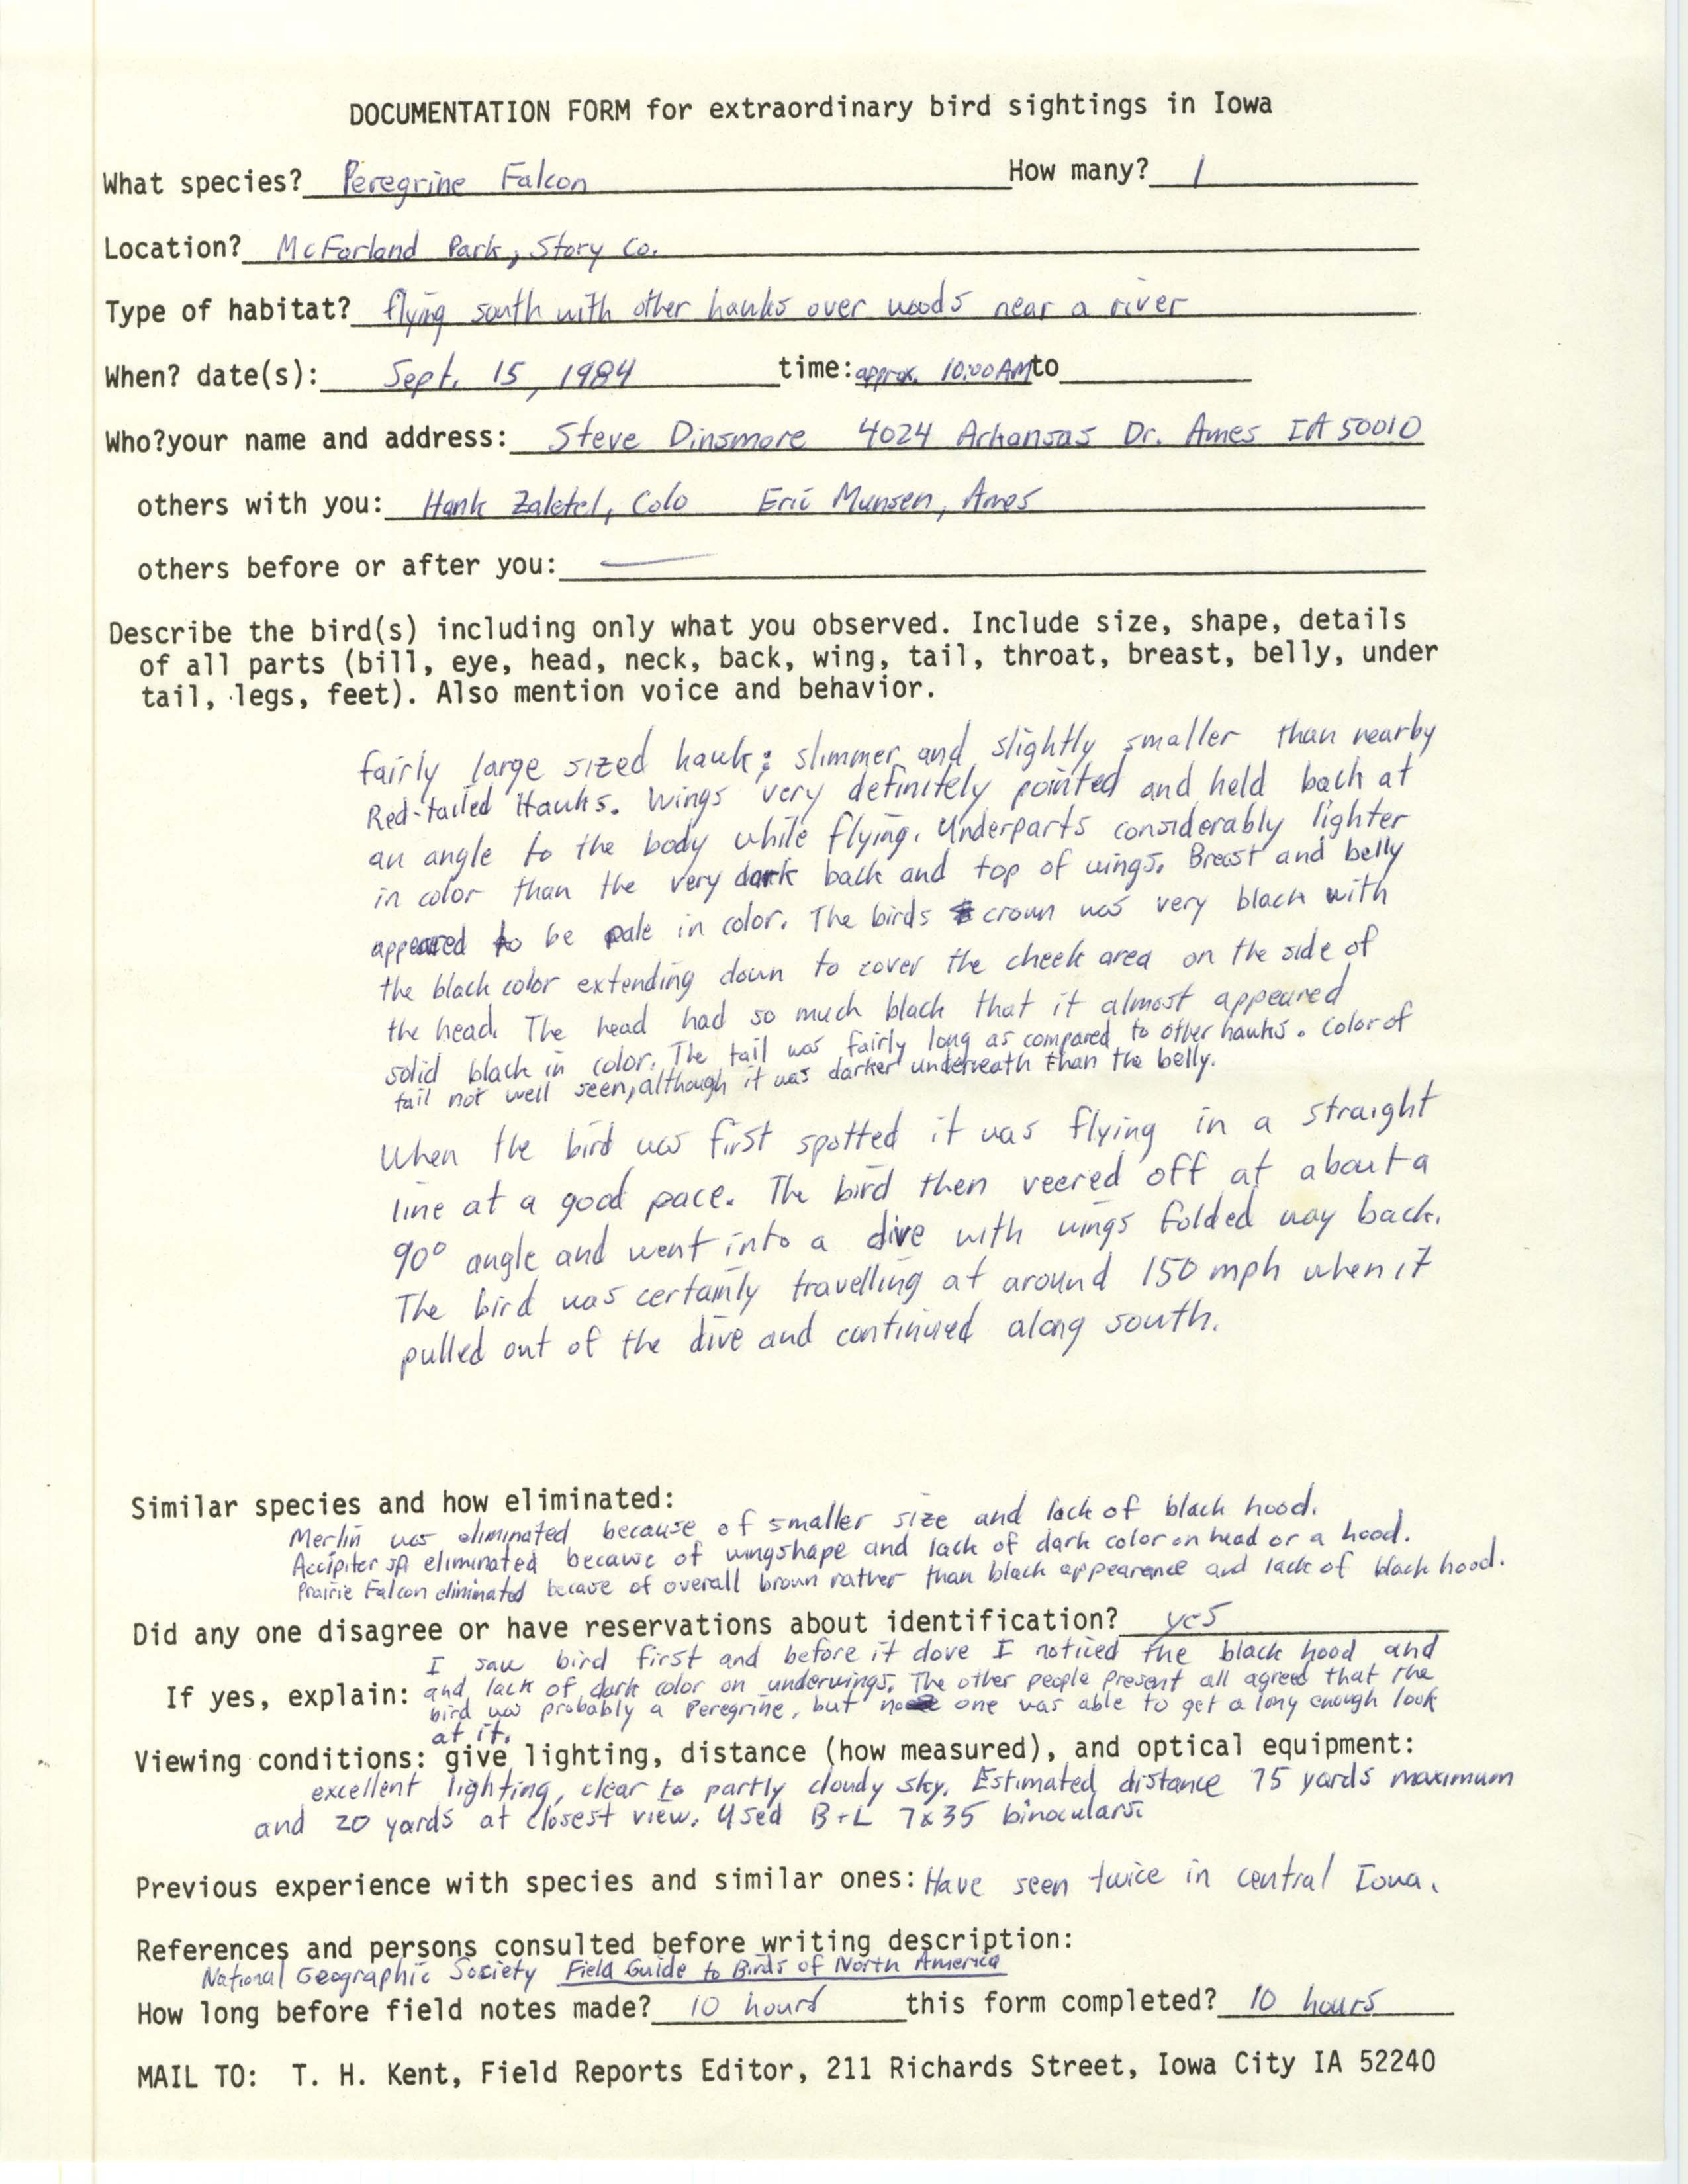 Rare bird documentation form for Peregrine Falcon at McFarland Park, 1984